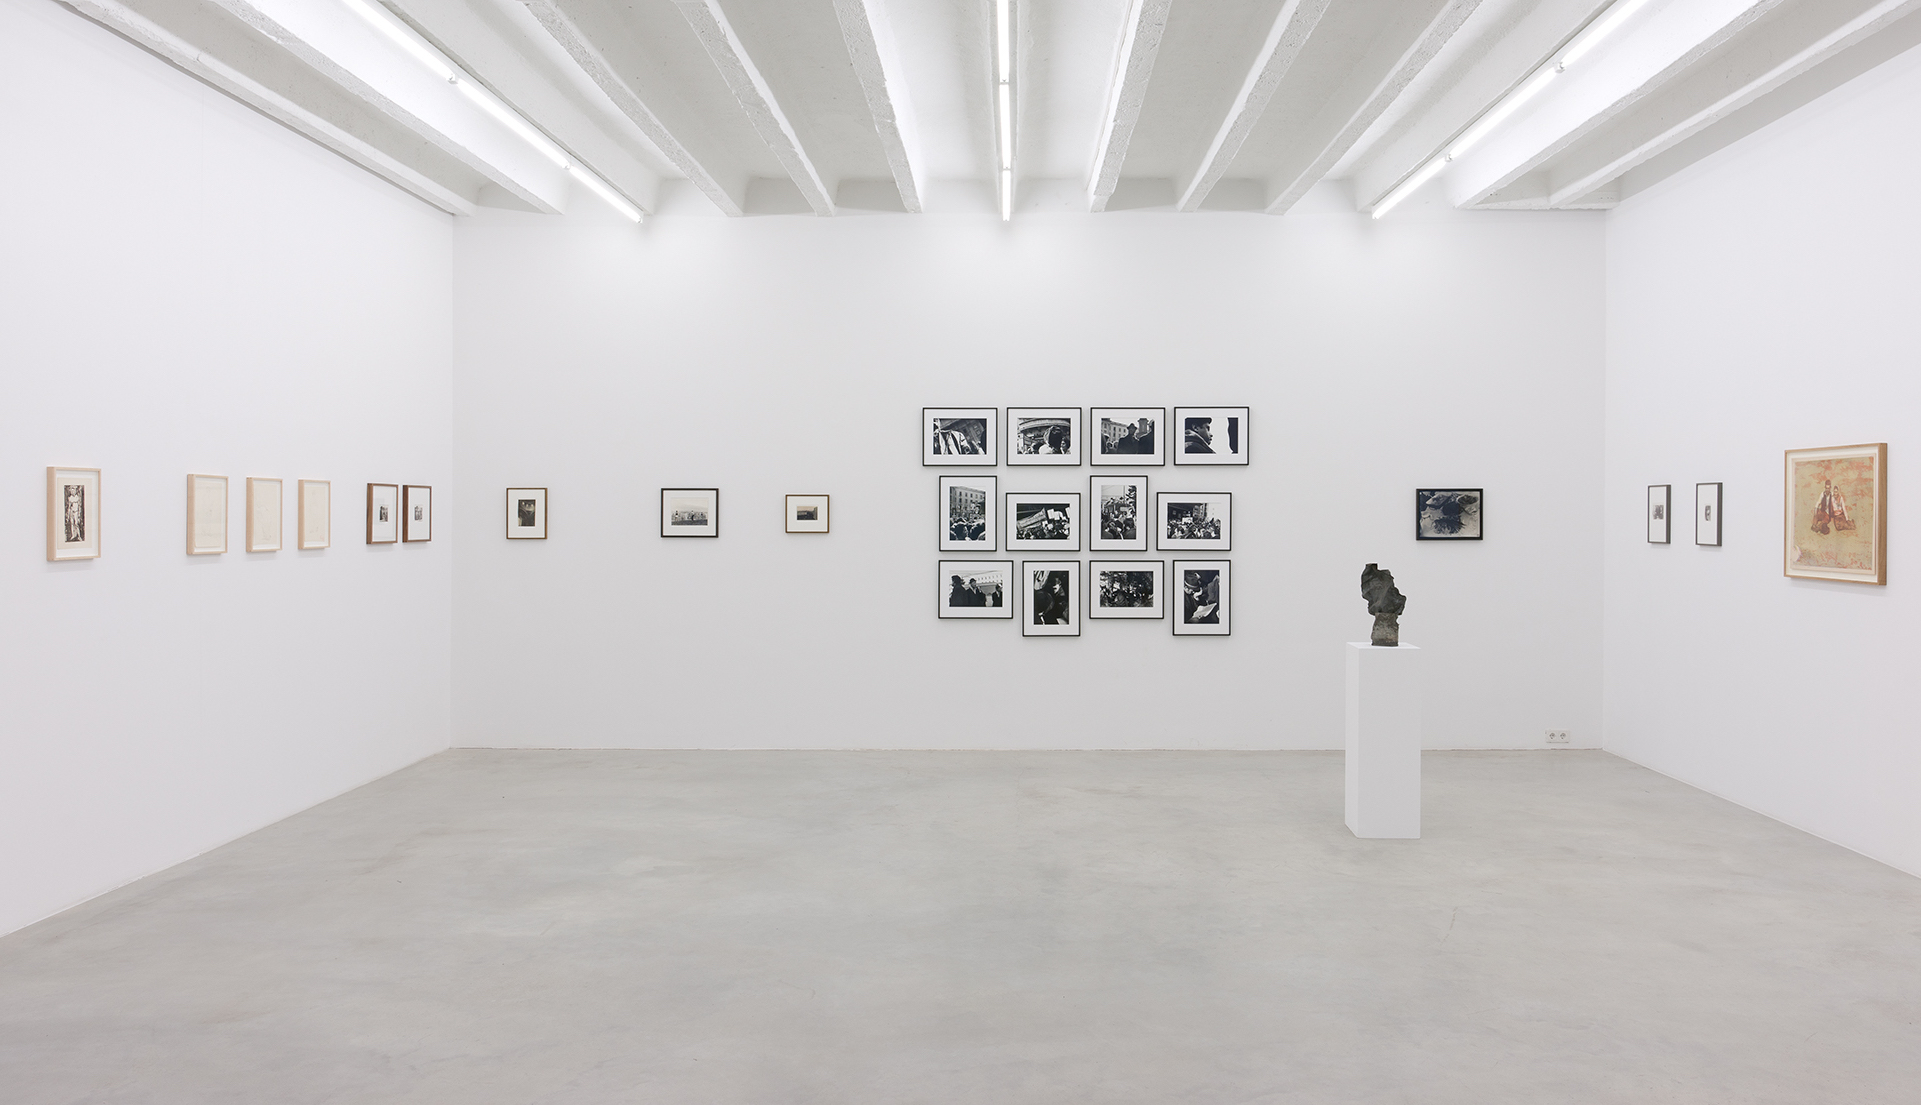 Exhibition view at Galerija Gregor Podnar, Berlin, 2012. Photos: Marcus Schneider